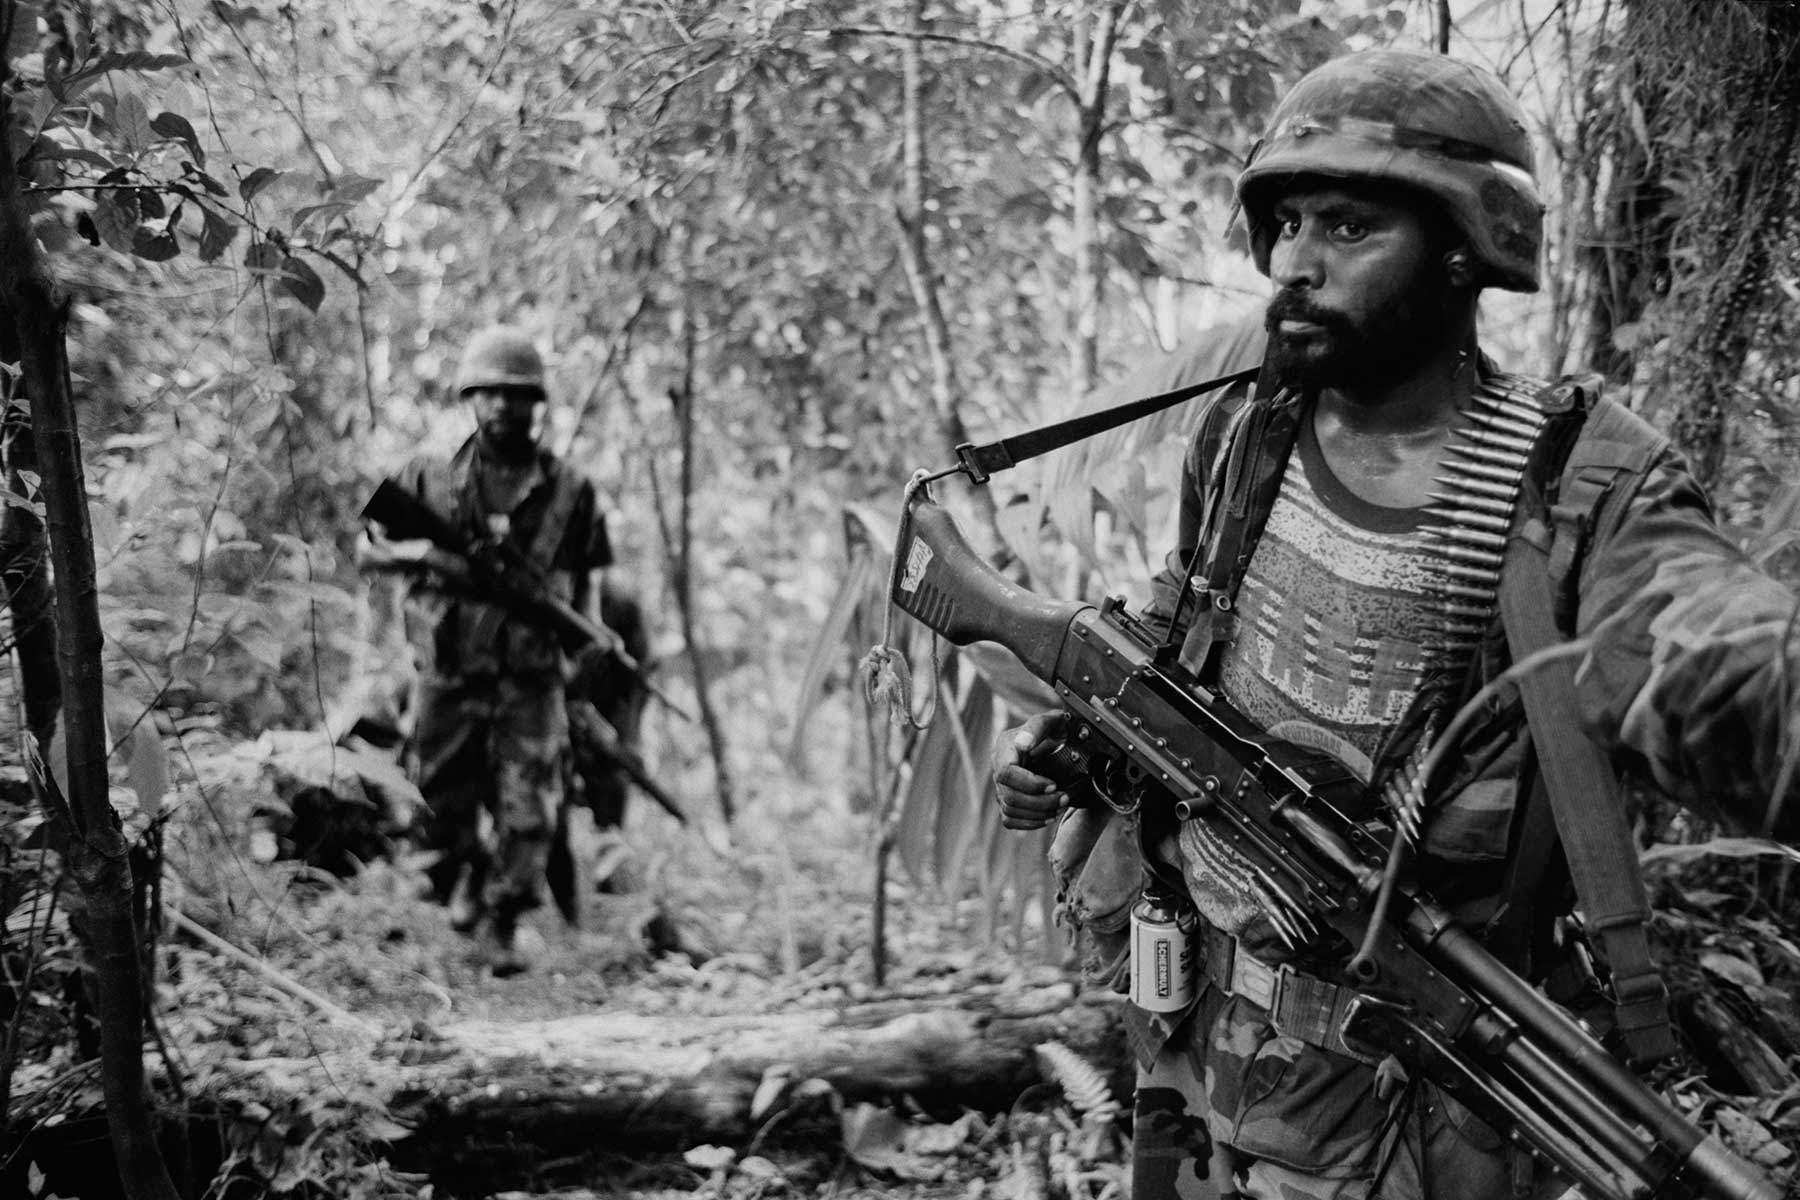 PNGDF troops on patrol in Bougainville, 1997 (Photo: Ben Bohane/Wakaphotos.com)